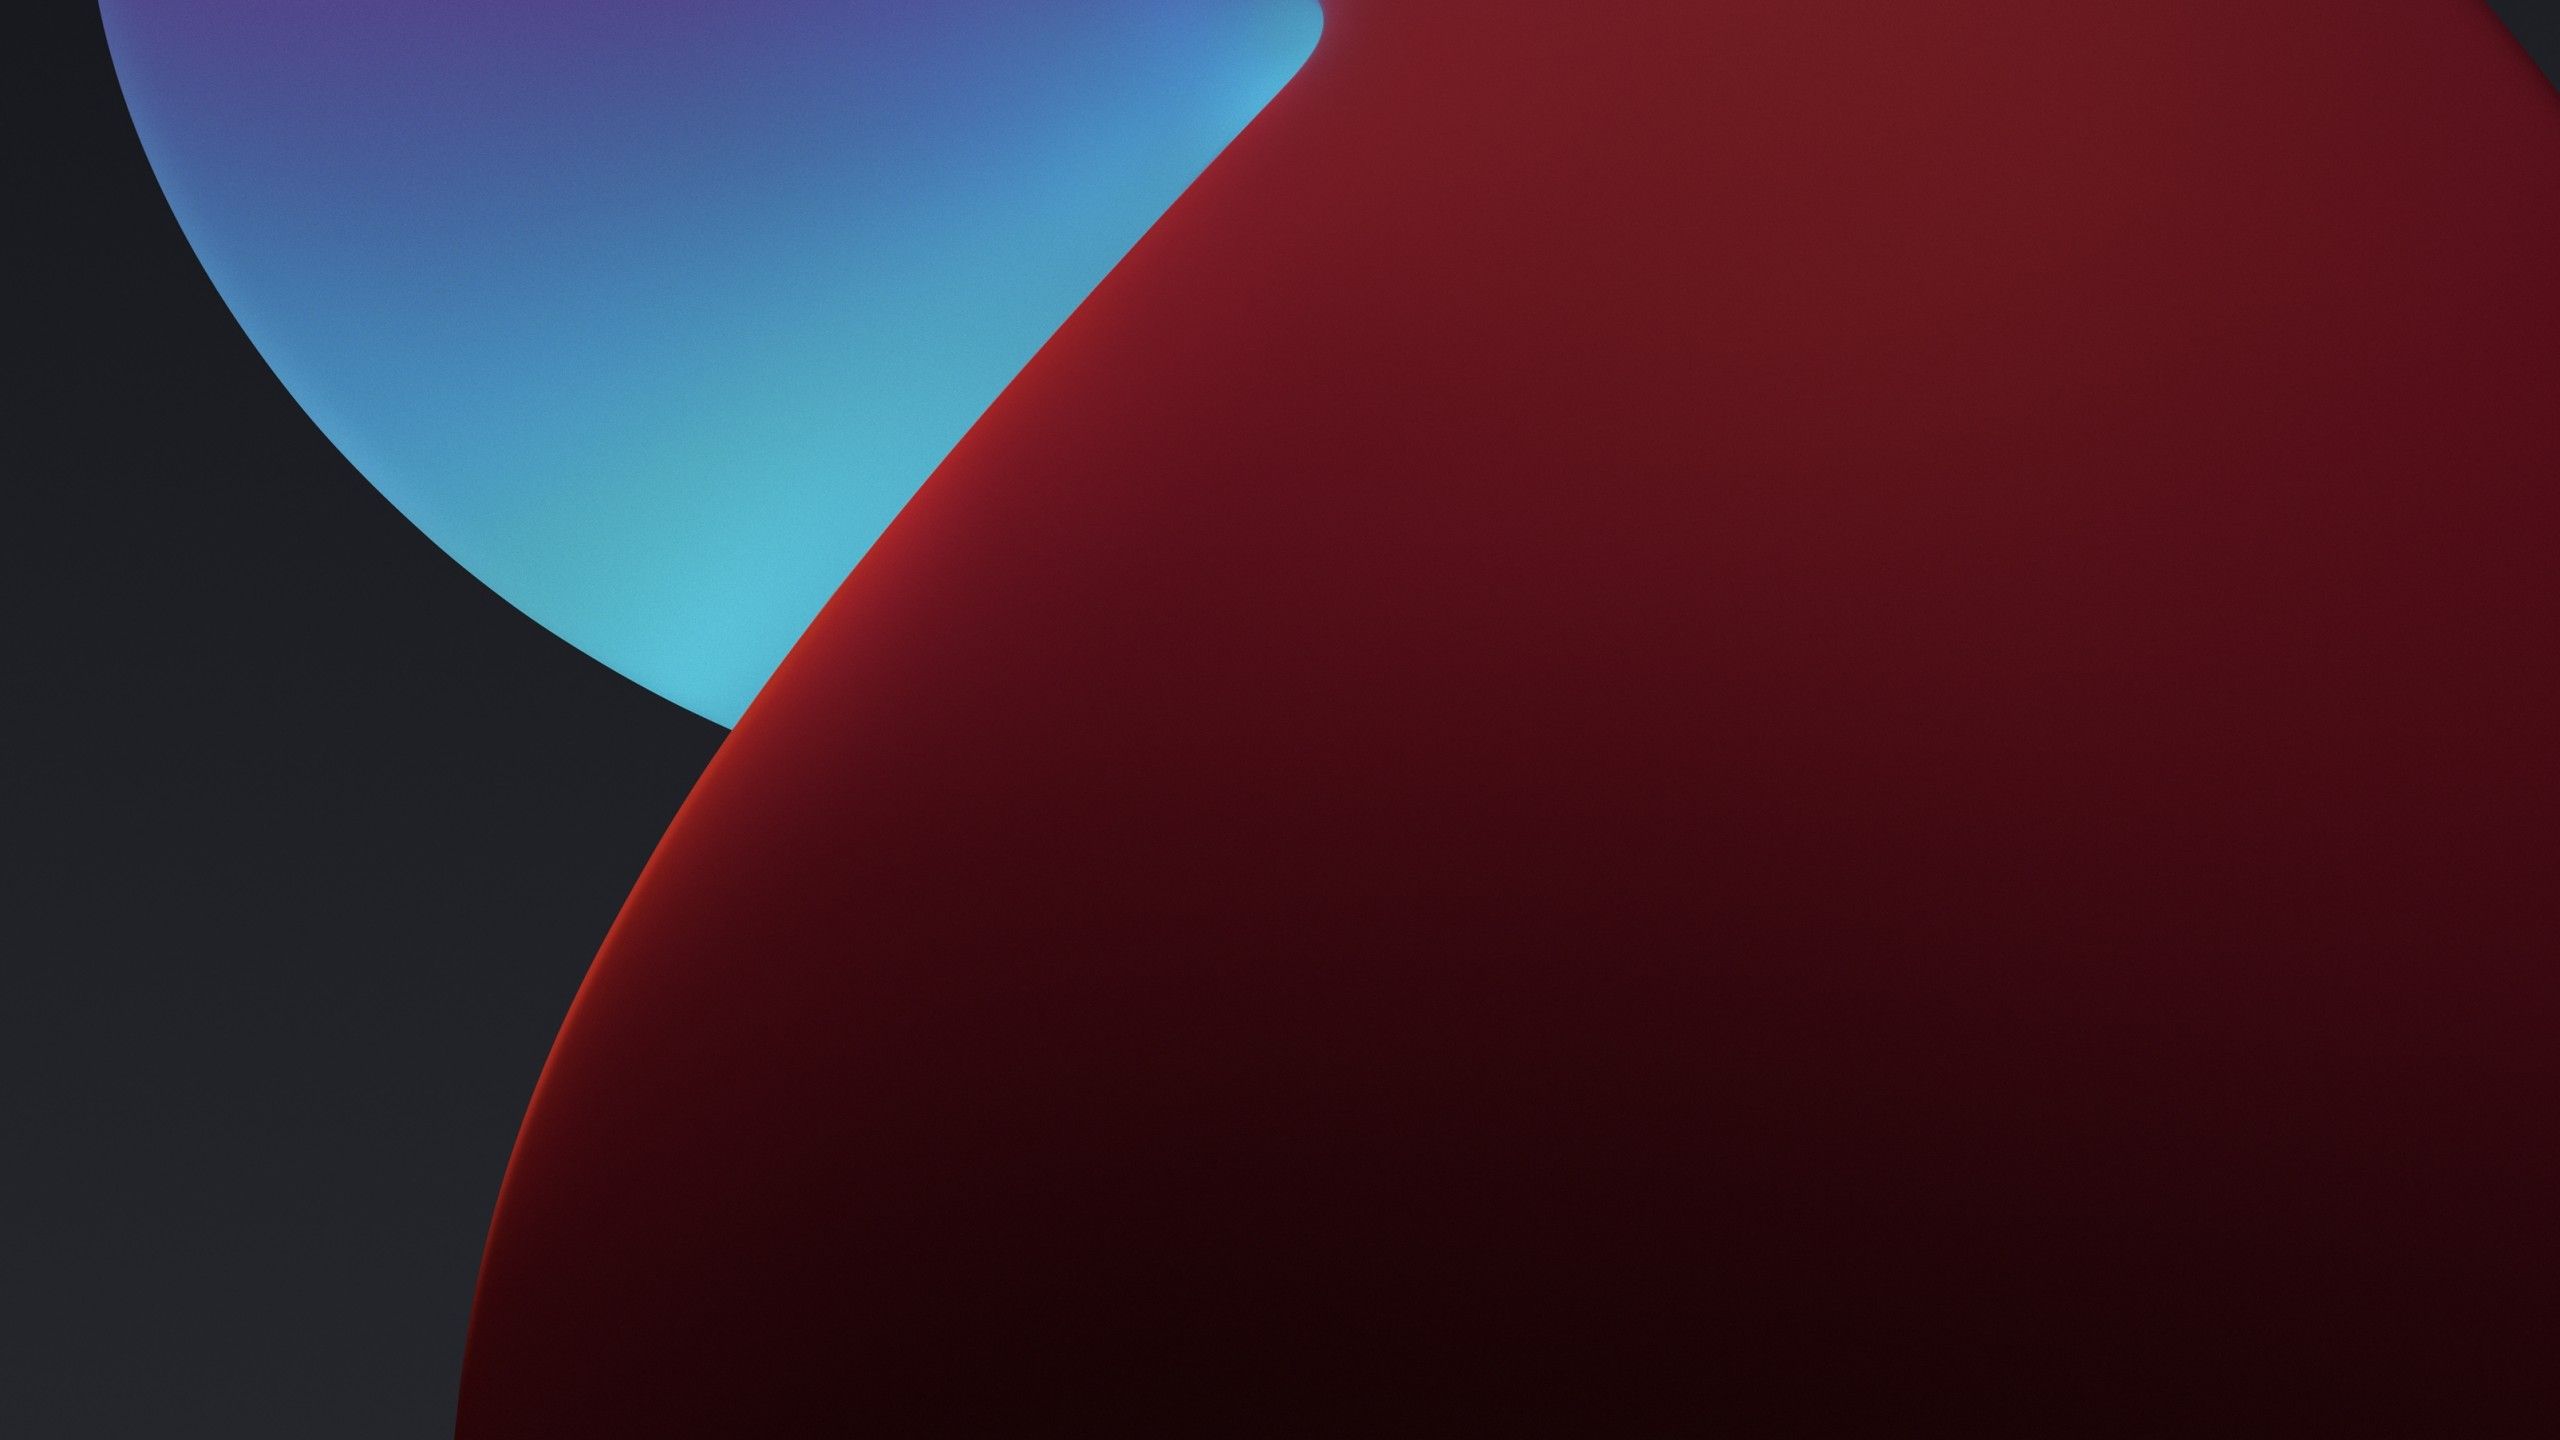 iPadOS 4K Wallpaper, Red, Dark, Abstract, Gradients